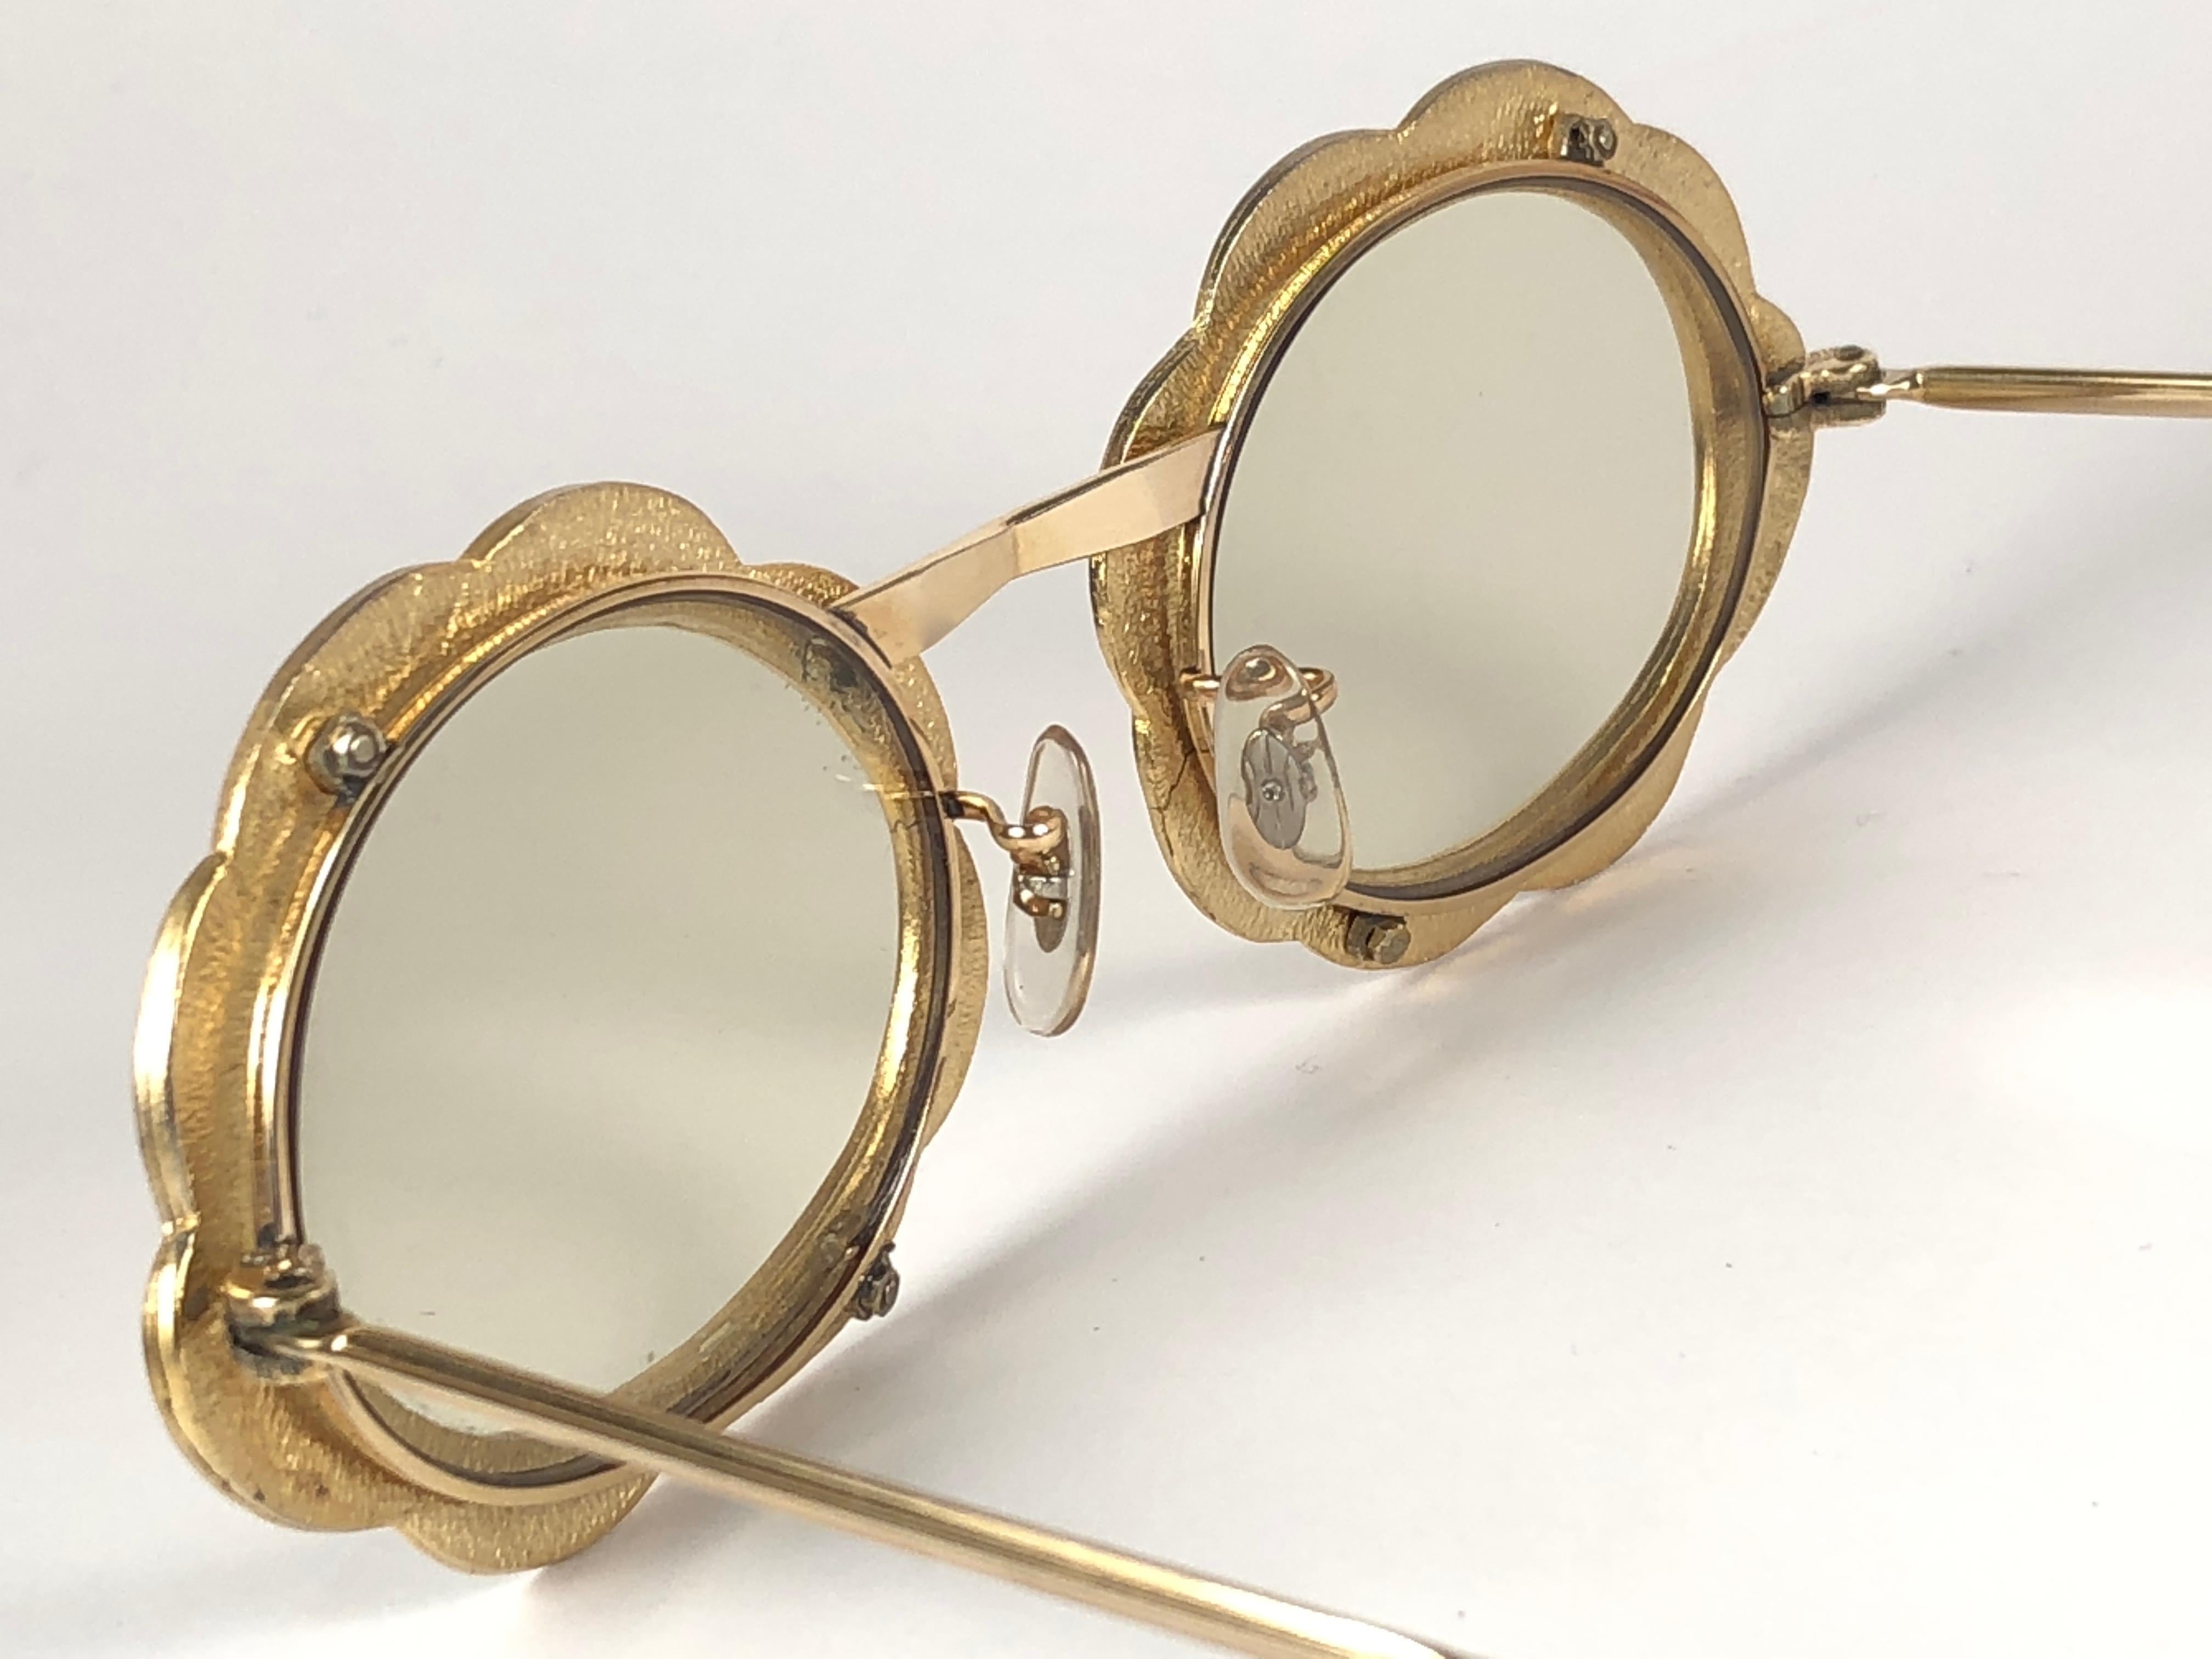 Ultra Rare 1960 Christian Dior Enamelled Collector Item Sunglasses 2